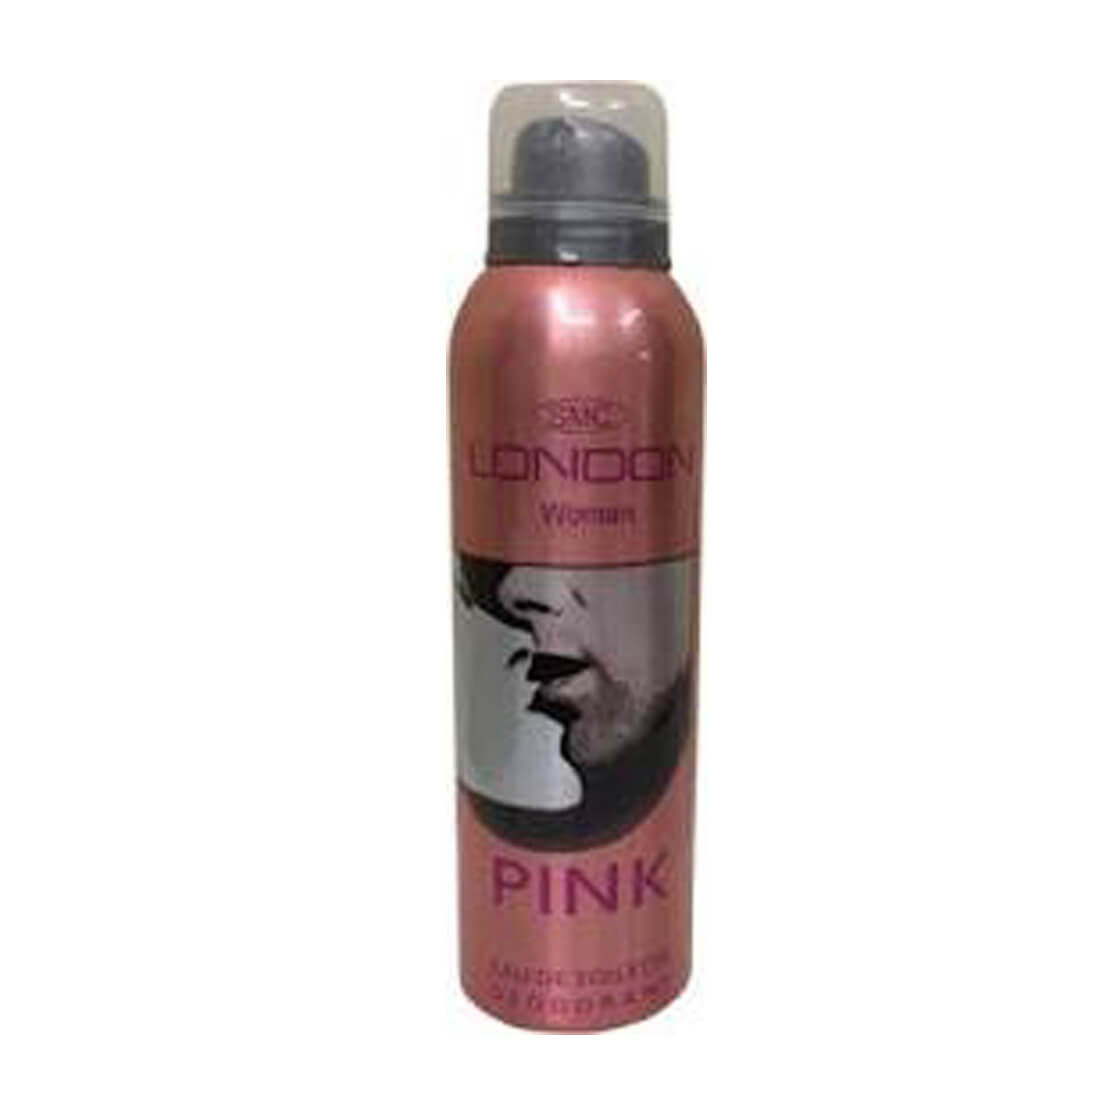 London Pink Deodorant Body Spray Pack of 2 x 200ml